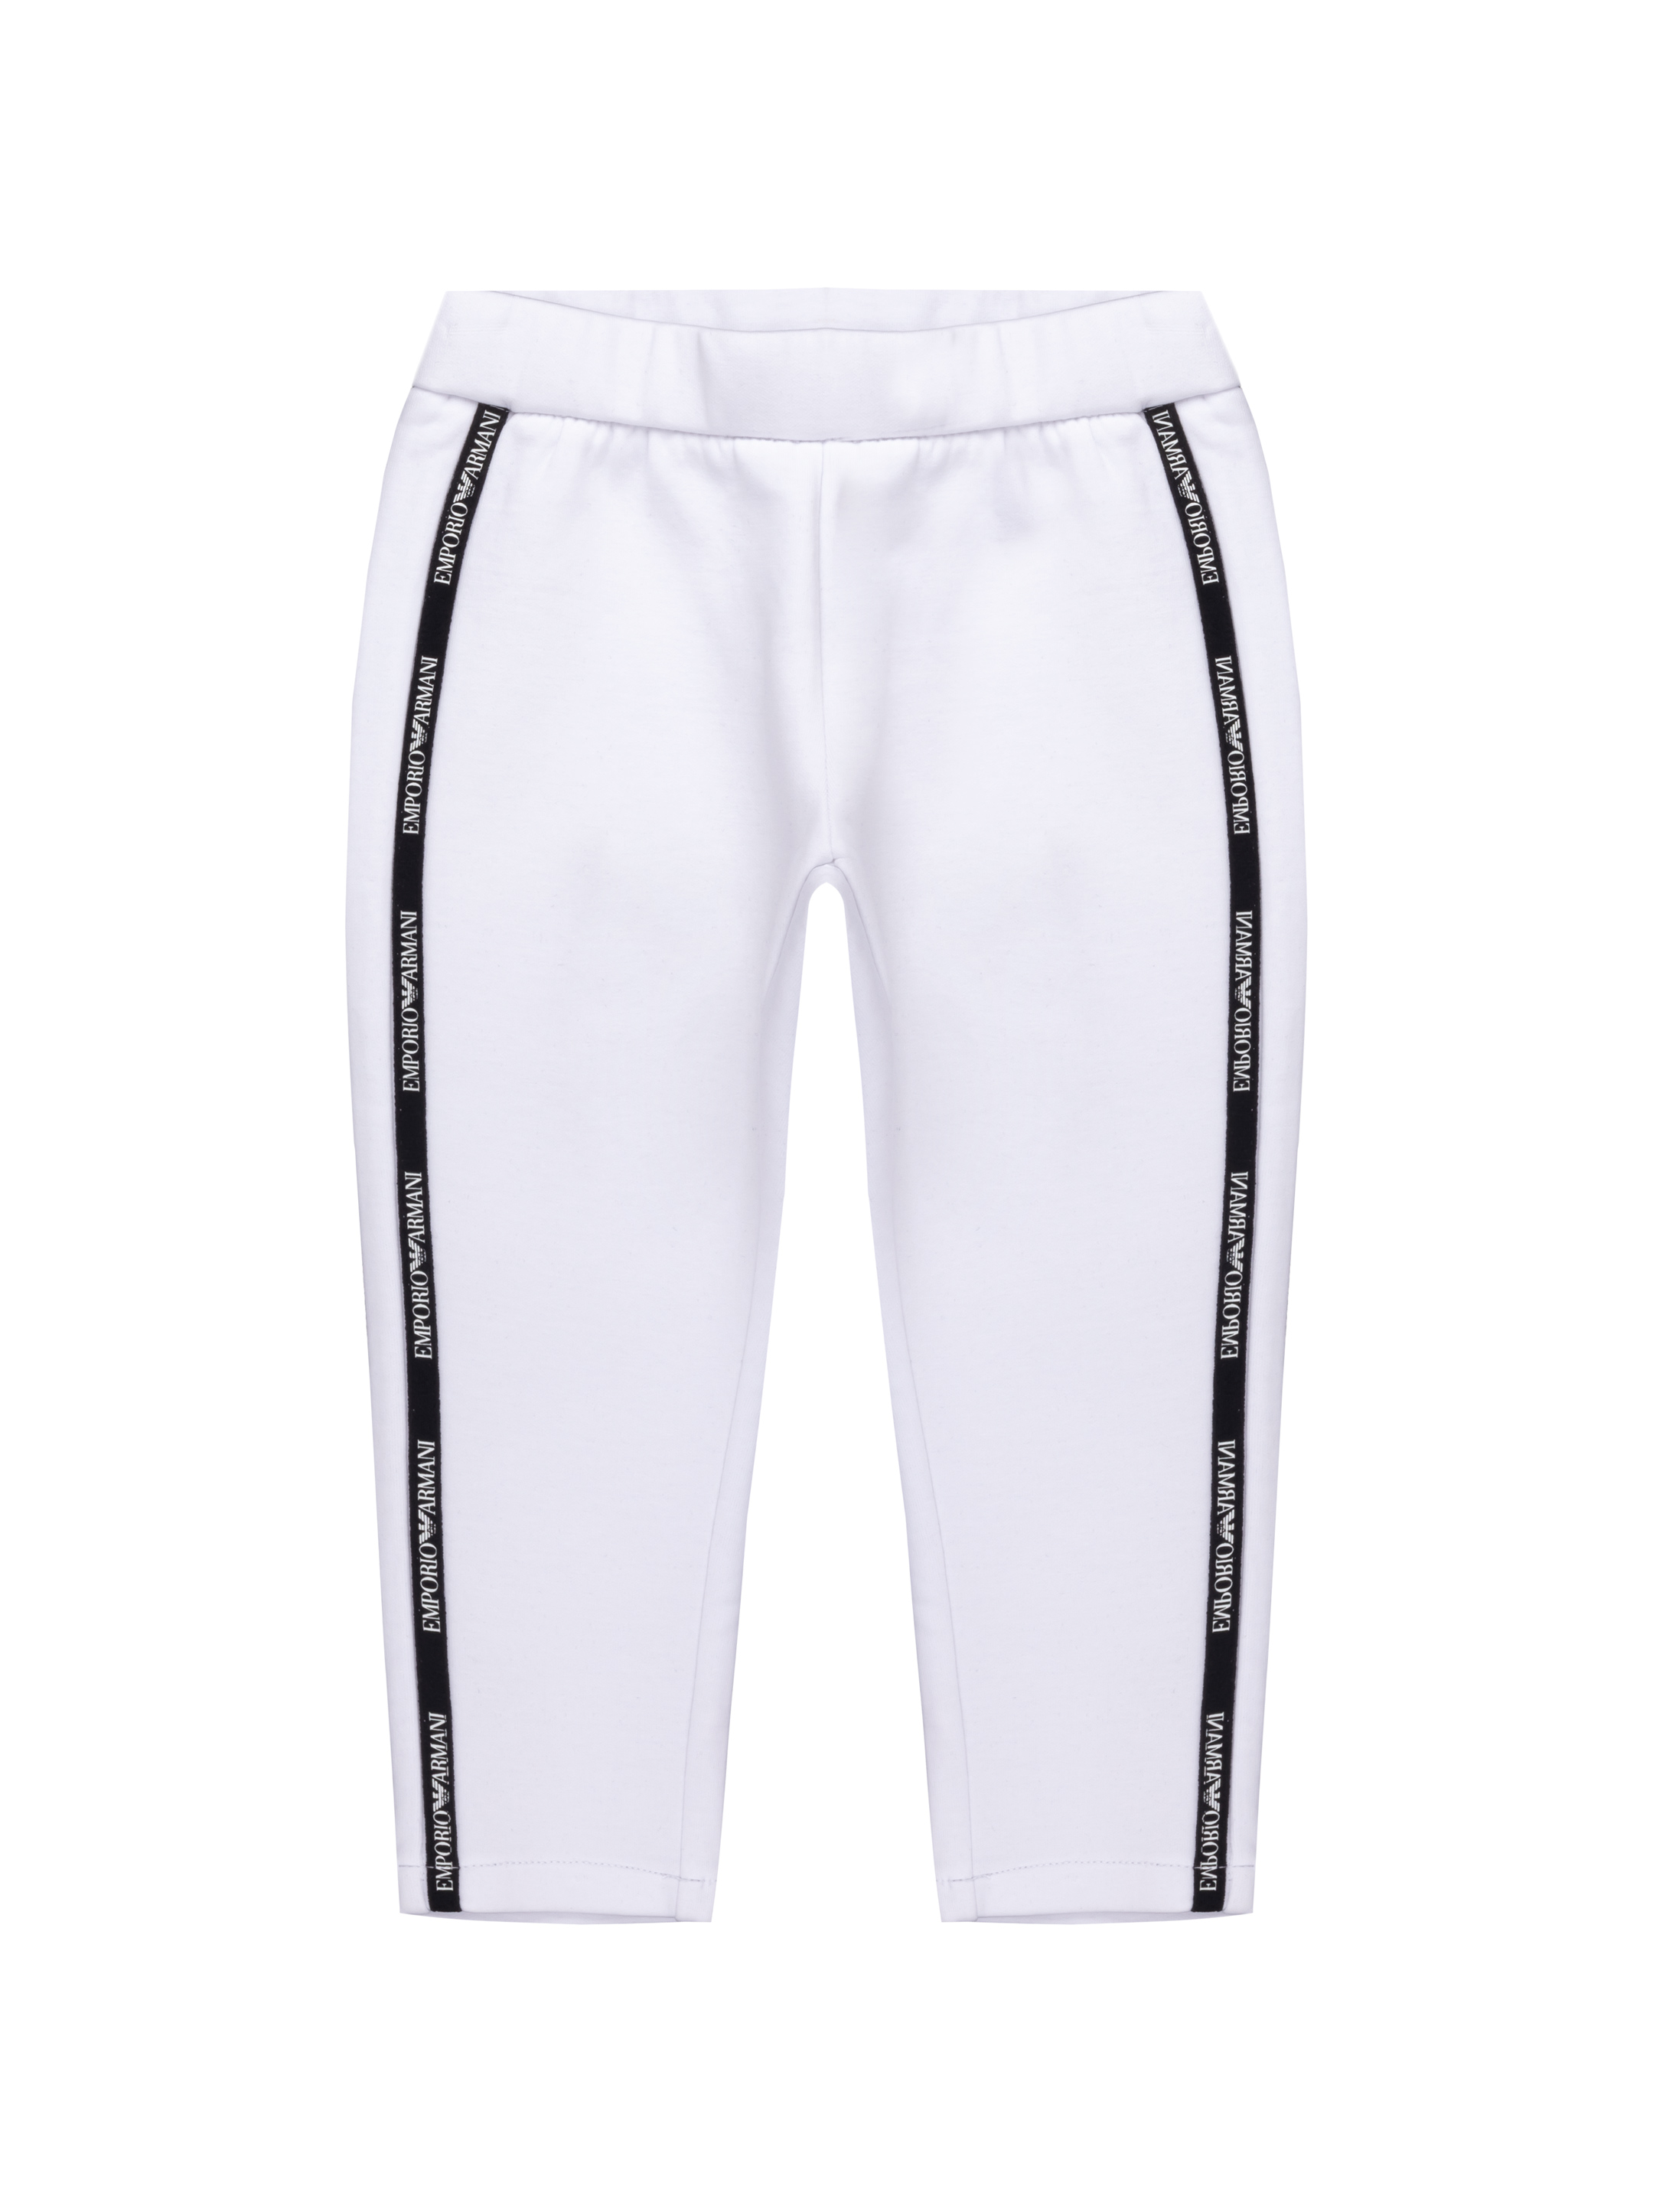 EMPORIO ARMANI Sports pants with logo для новорождённых - buy for 86100 KZT  in the official Viled online store, art. 3LEP6B 